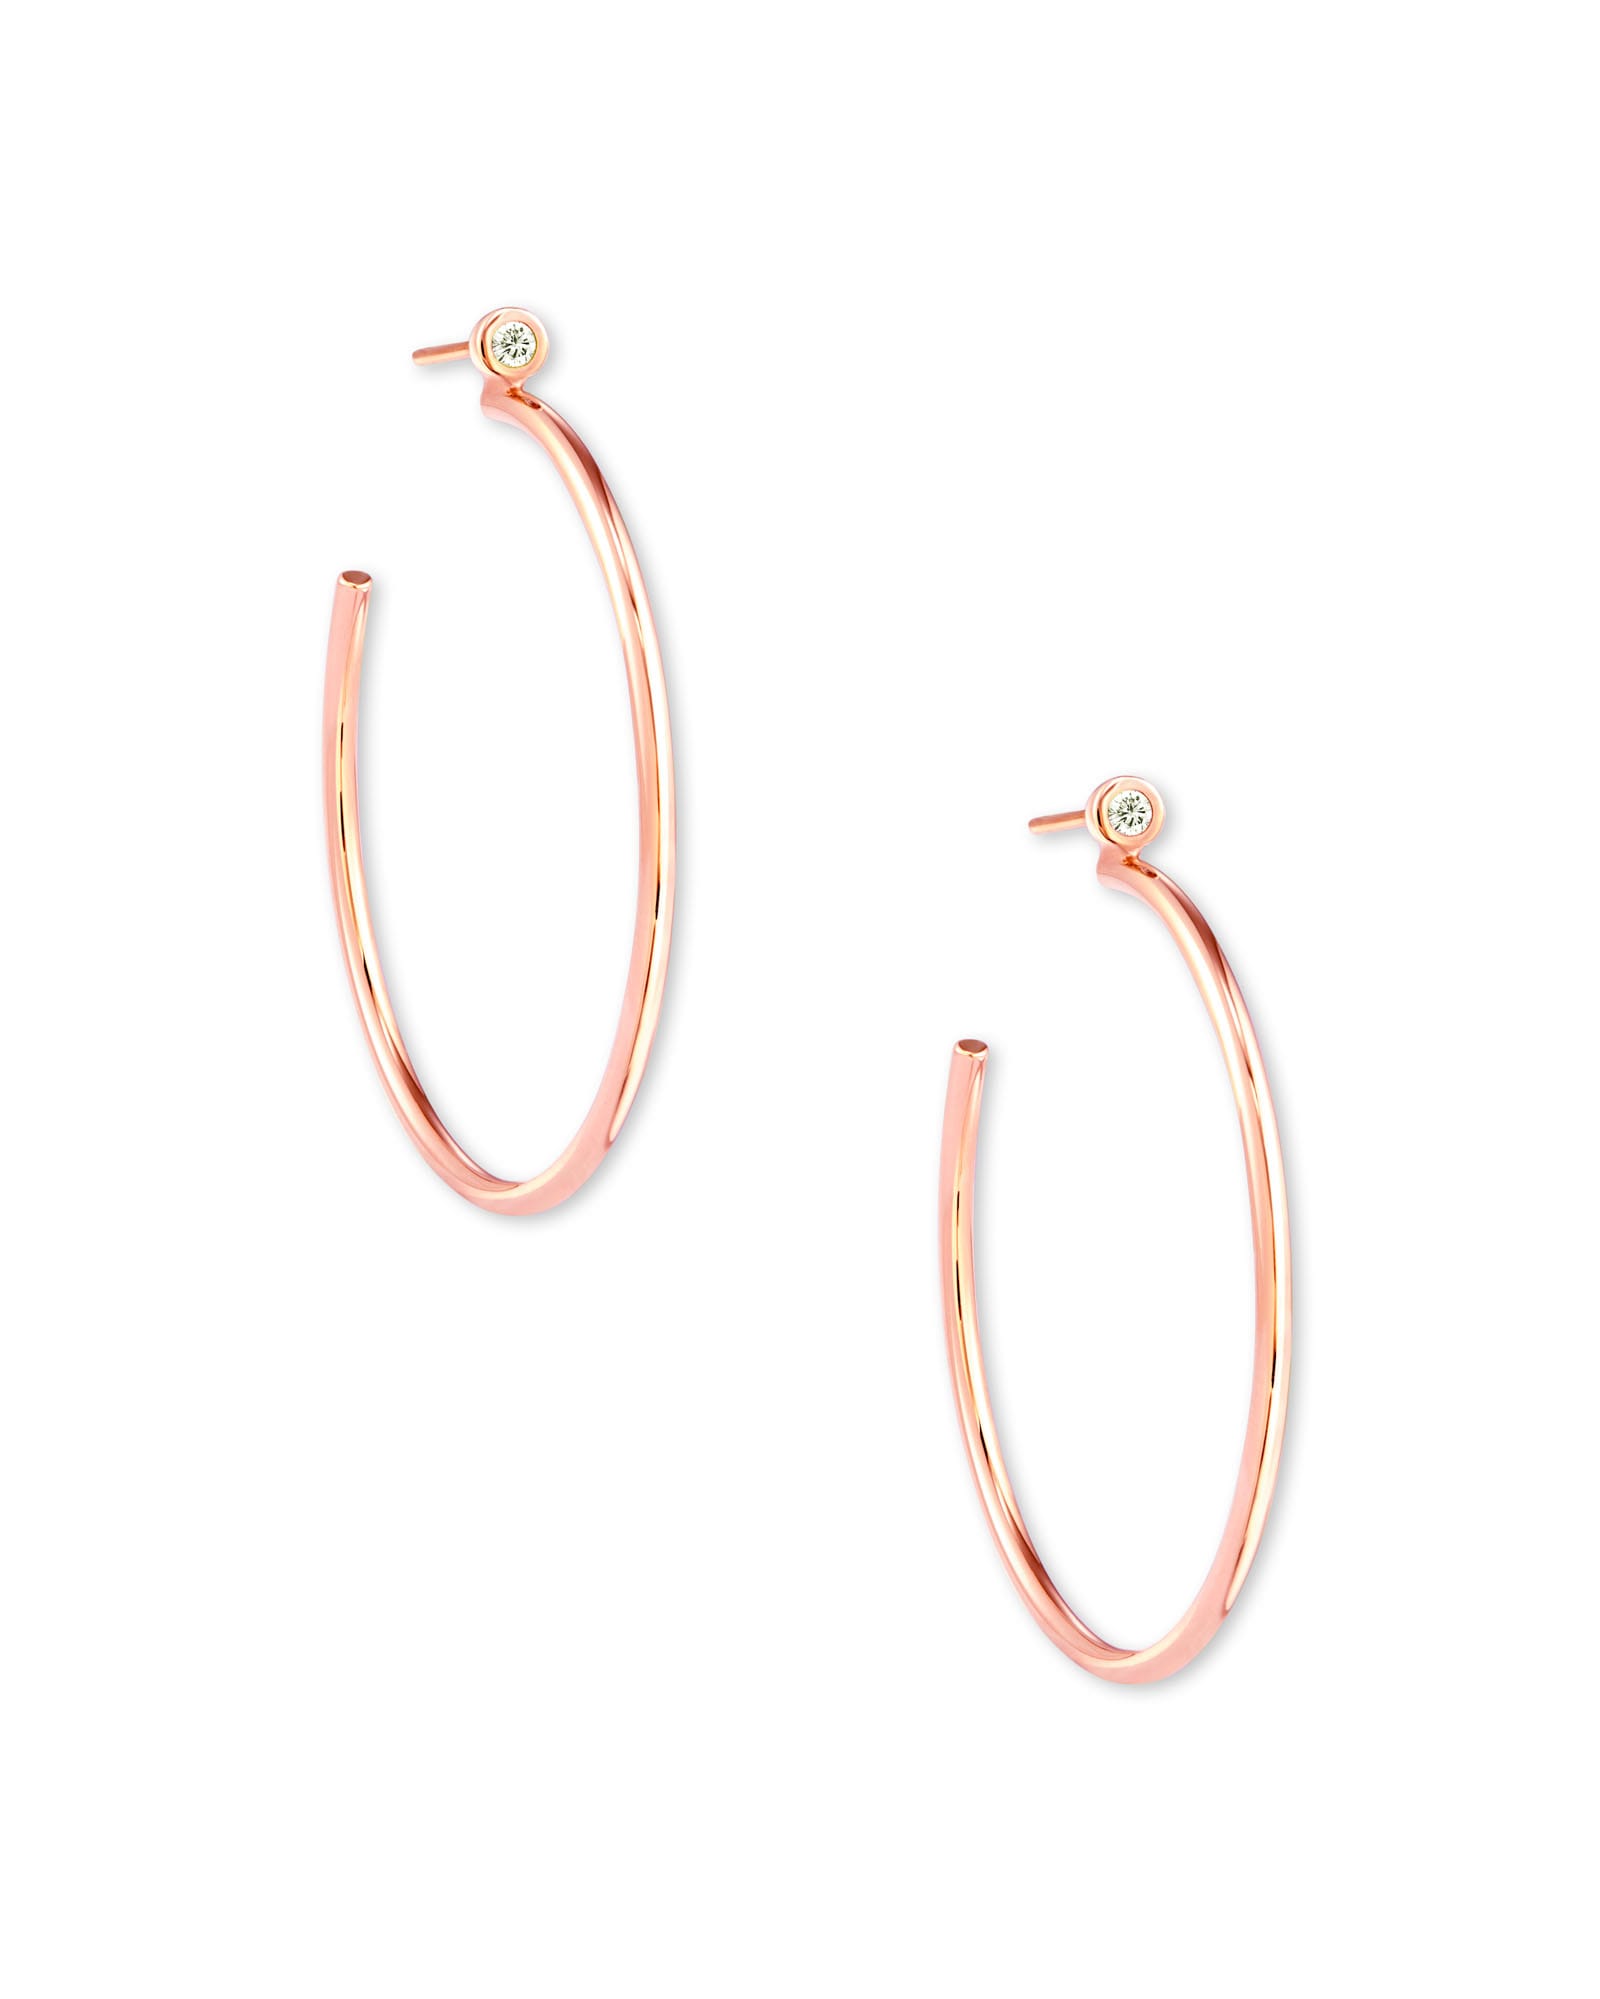 Kendra Scott Audrey 14k Rose Gold Hoop Earrings in White Diamond | Diamonds